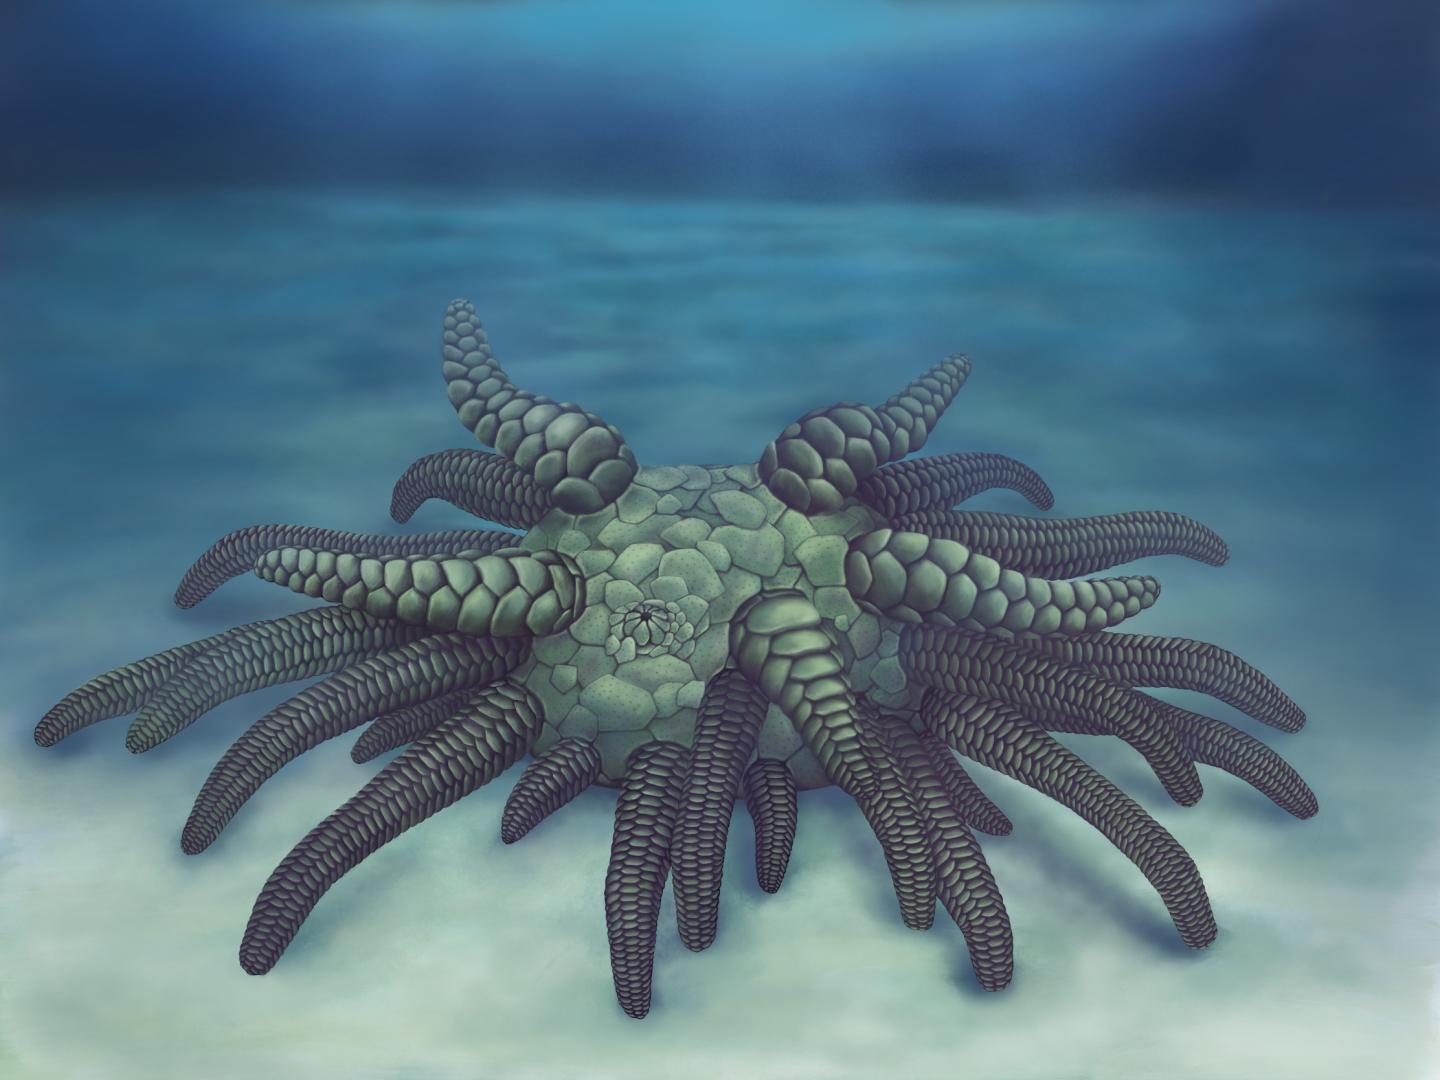 The return of Cthulhu -- the small sea critte | EurekAlert!